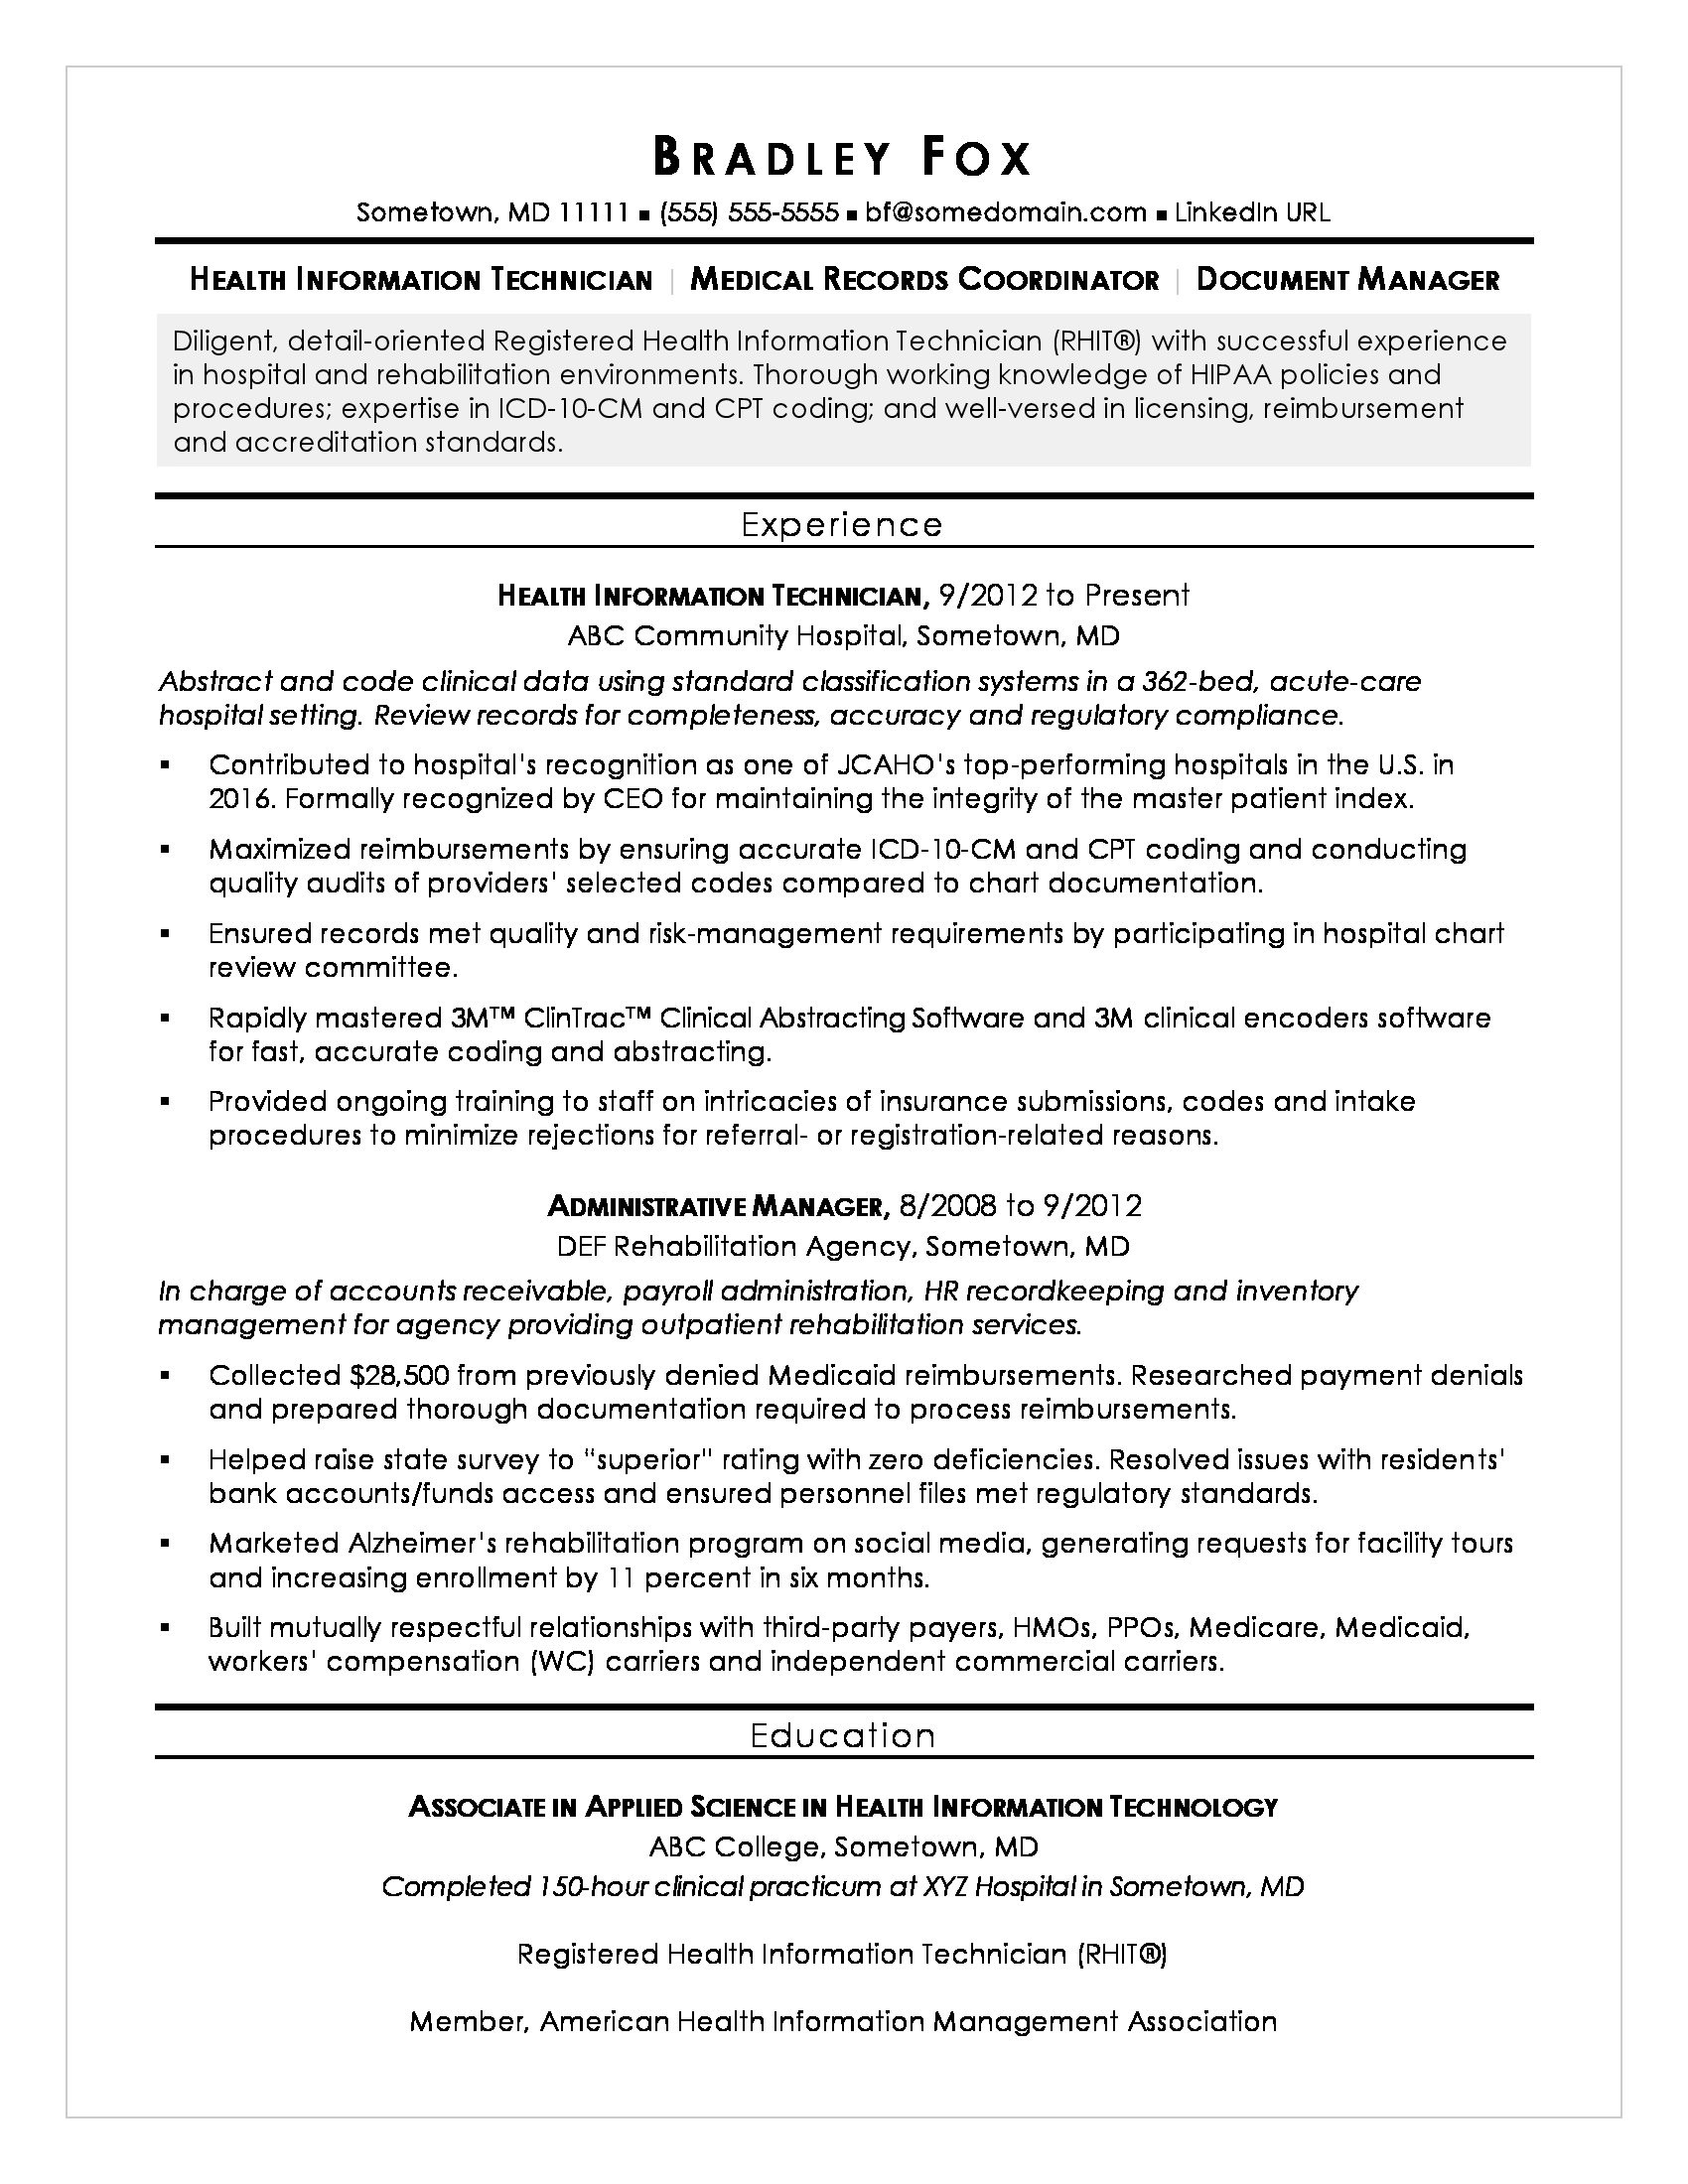 Sample Resume Entry Level Medical Inventory Health Information Technician Sample Resume Monster.com